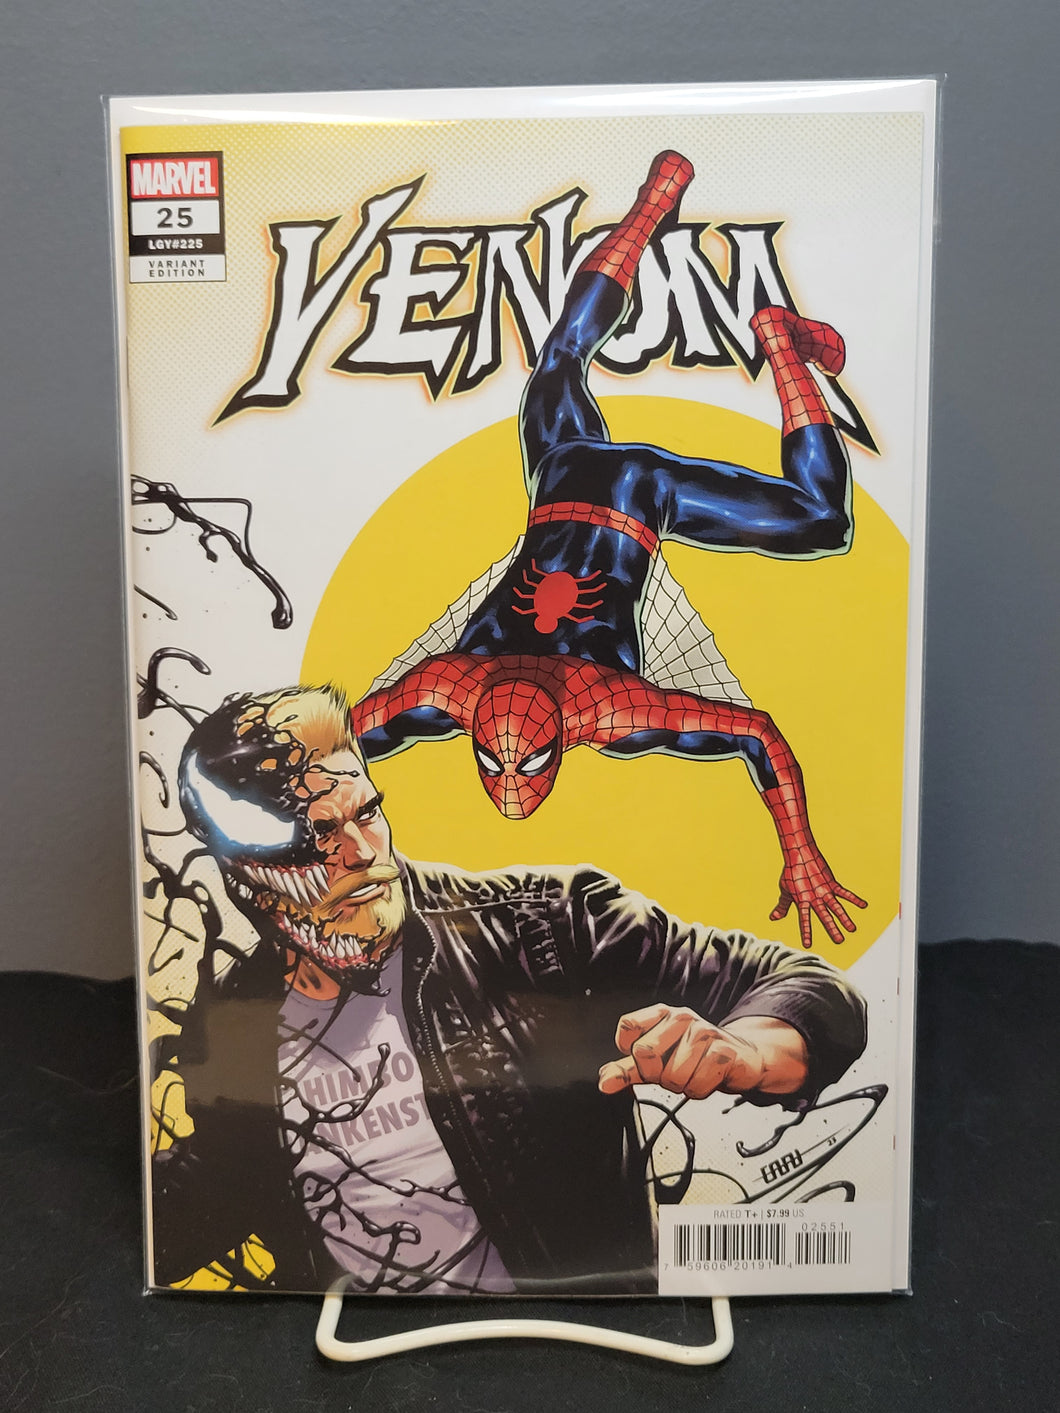 Venom #25 Variant